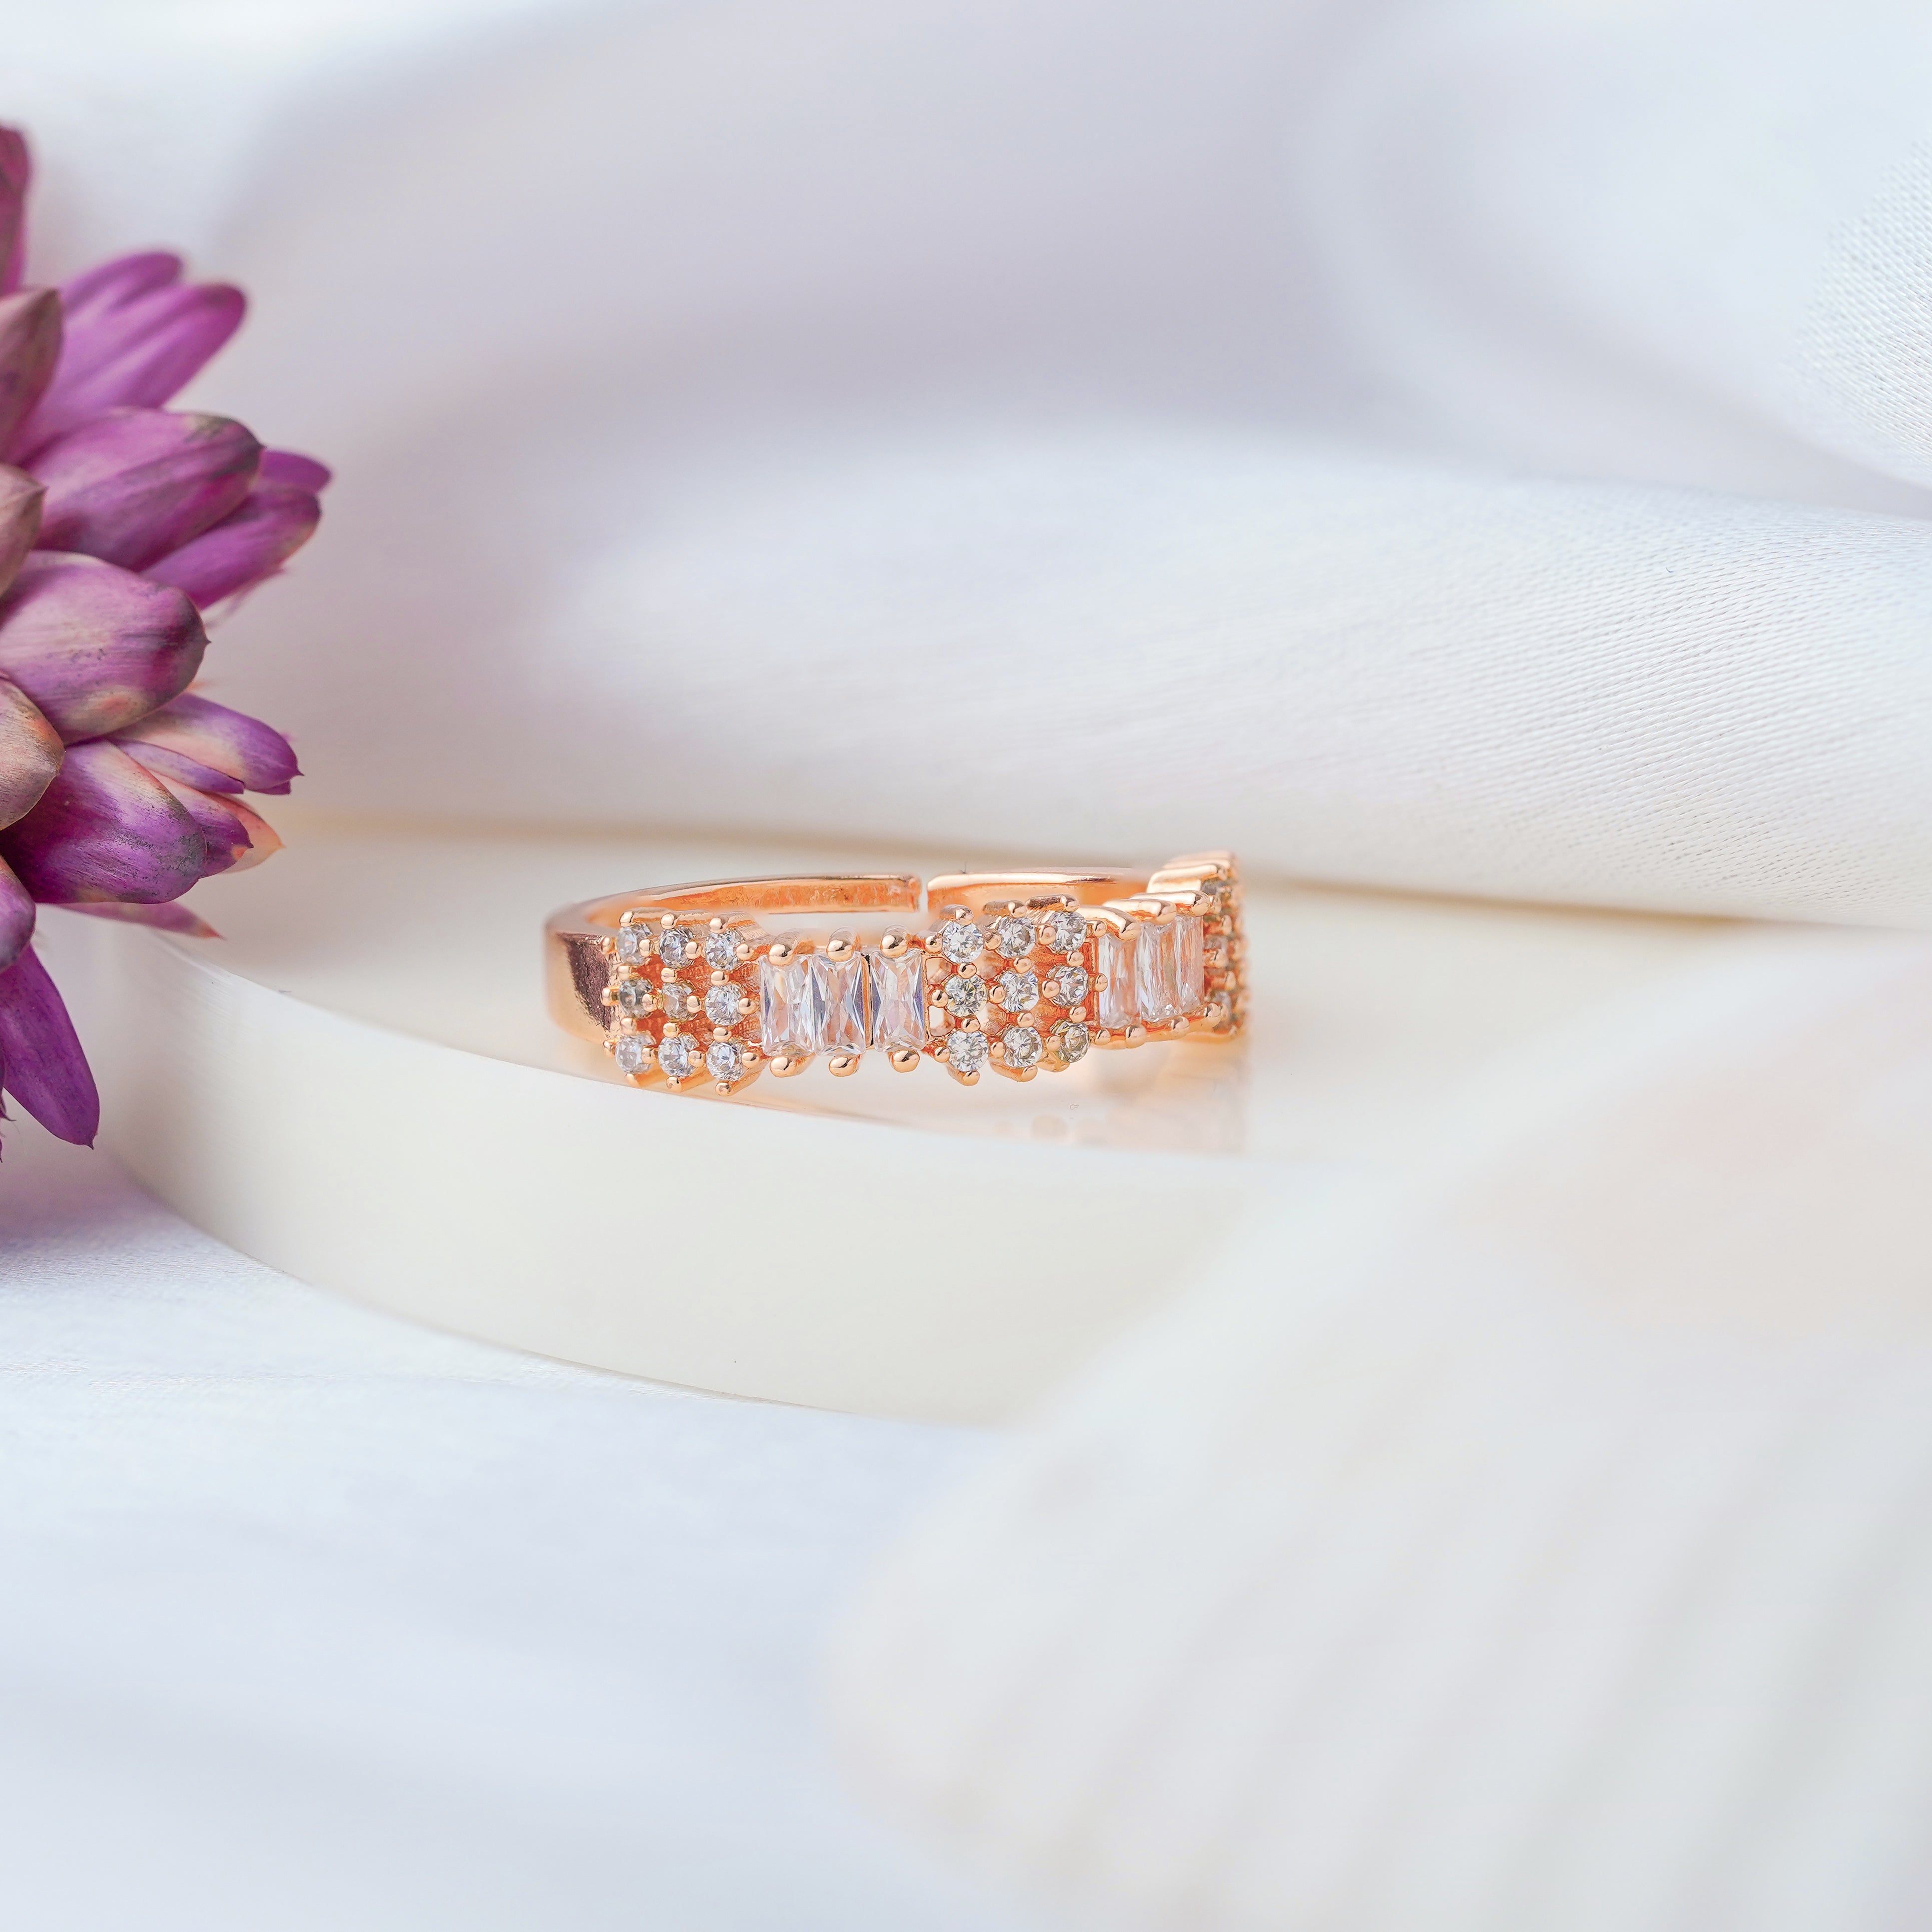 Jewelsium Rose Gold Designer Artificial Ring: Effortless Glamour, Endless Admiration